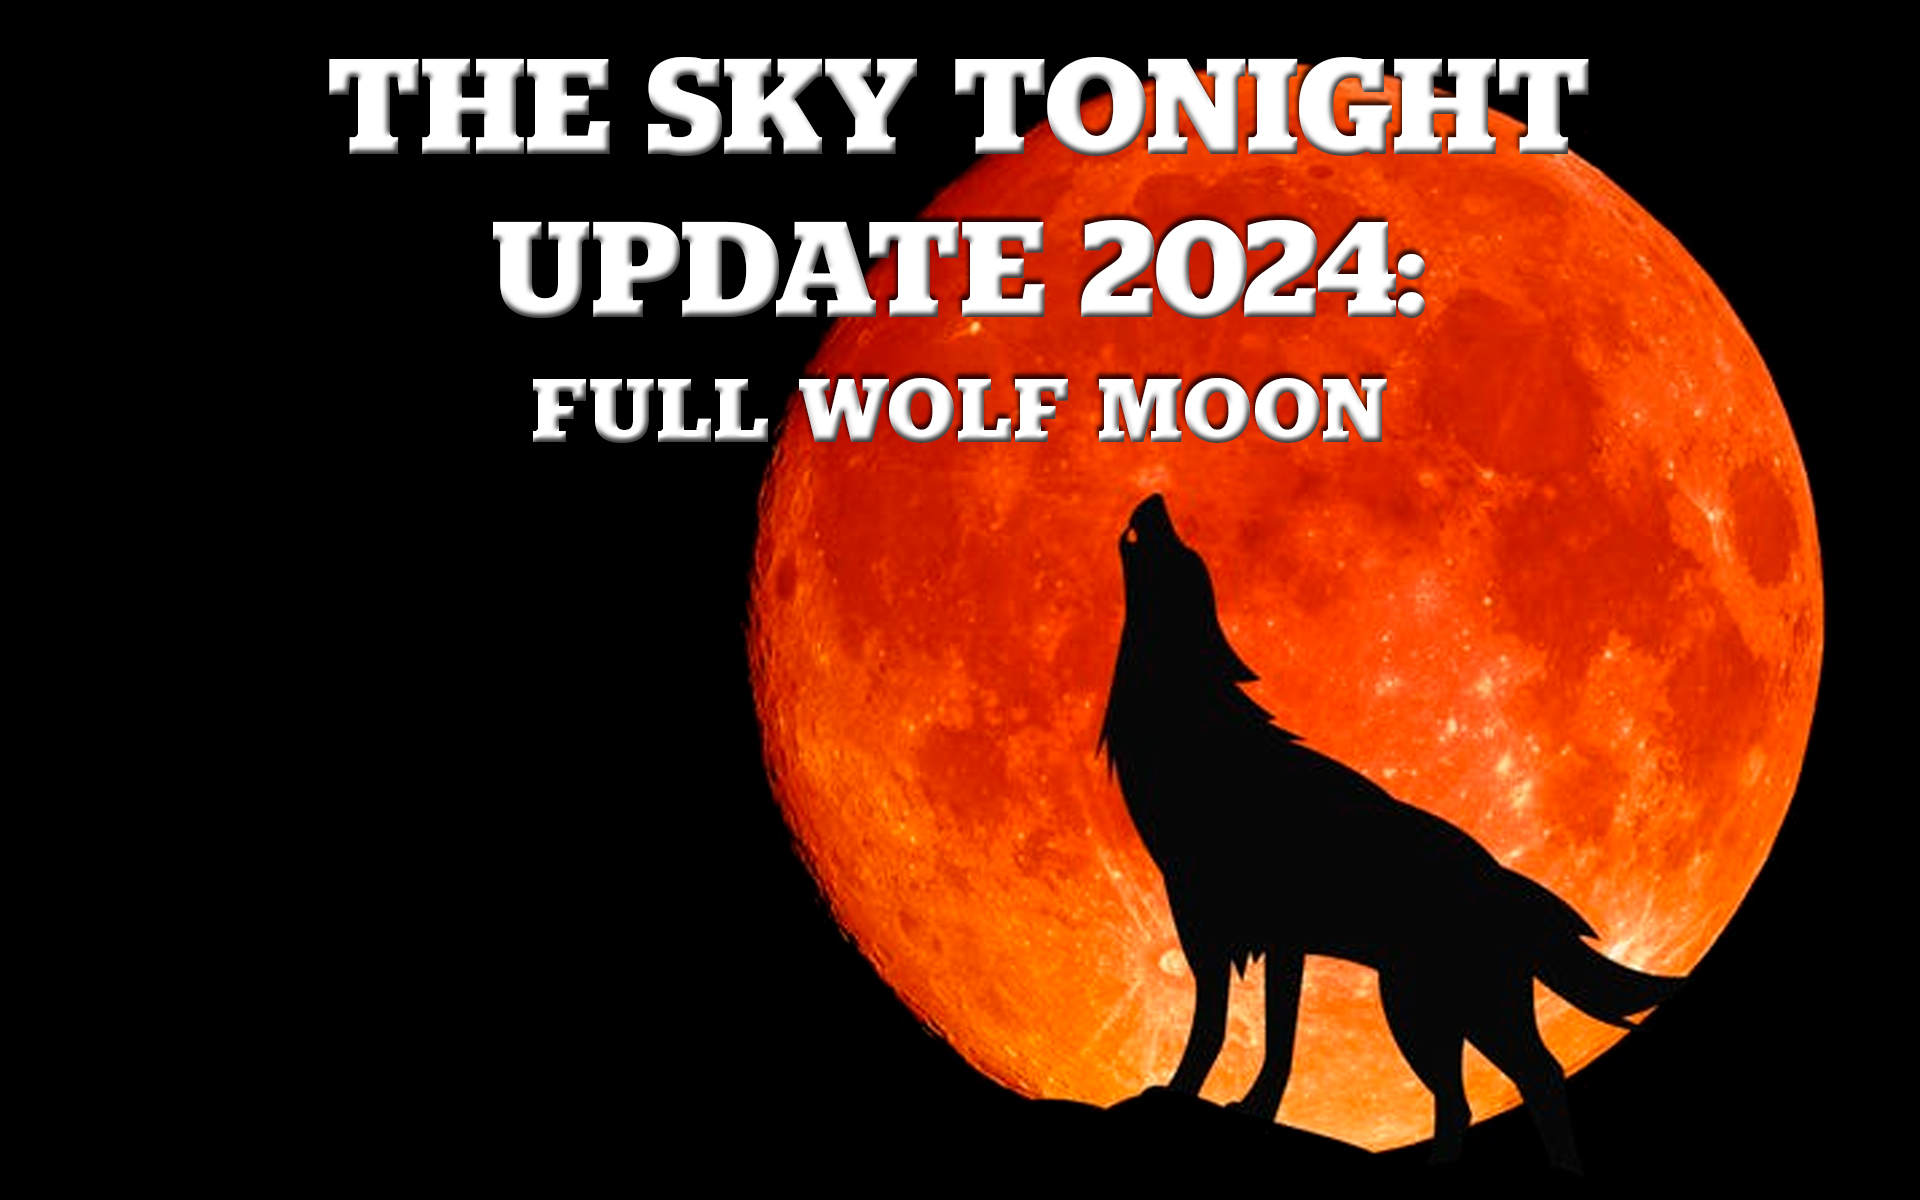 The Sky Tonight Update: Full Wolf Moon